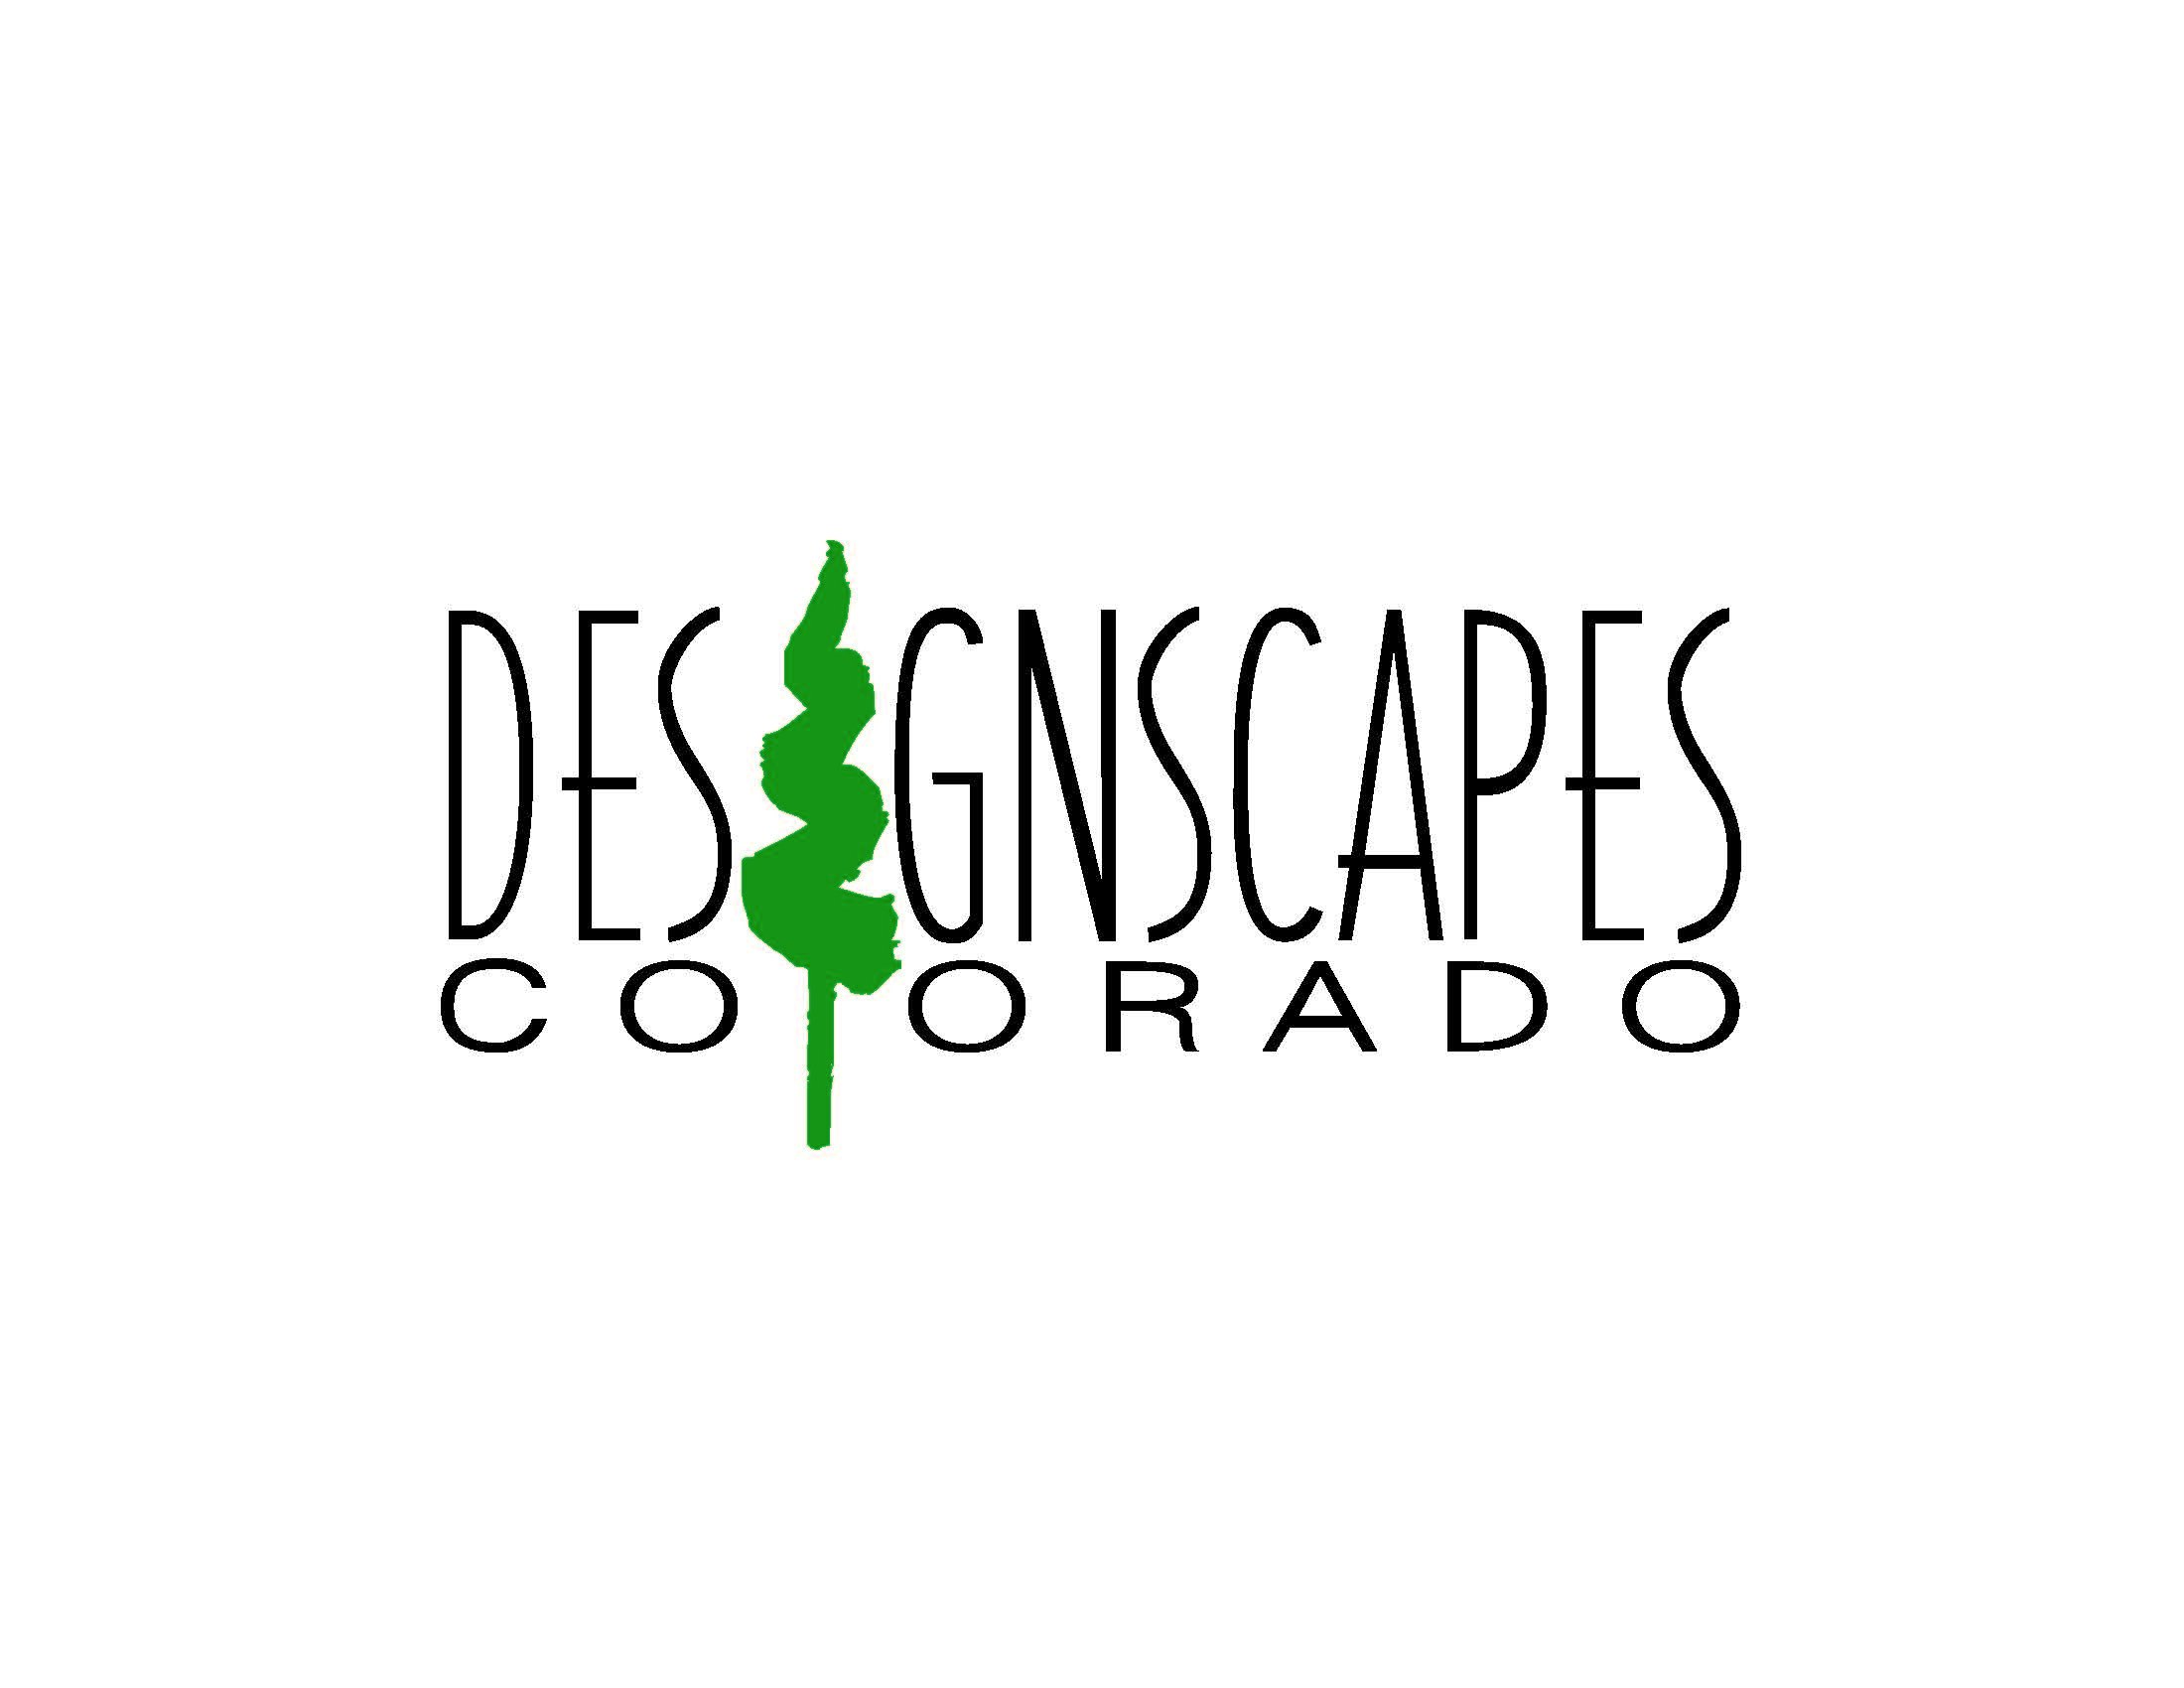  Designscapes Colorado logo 